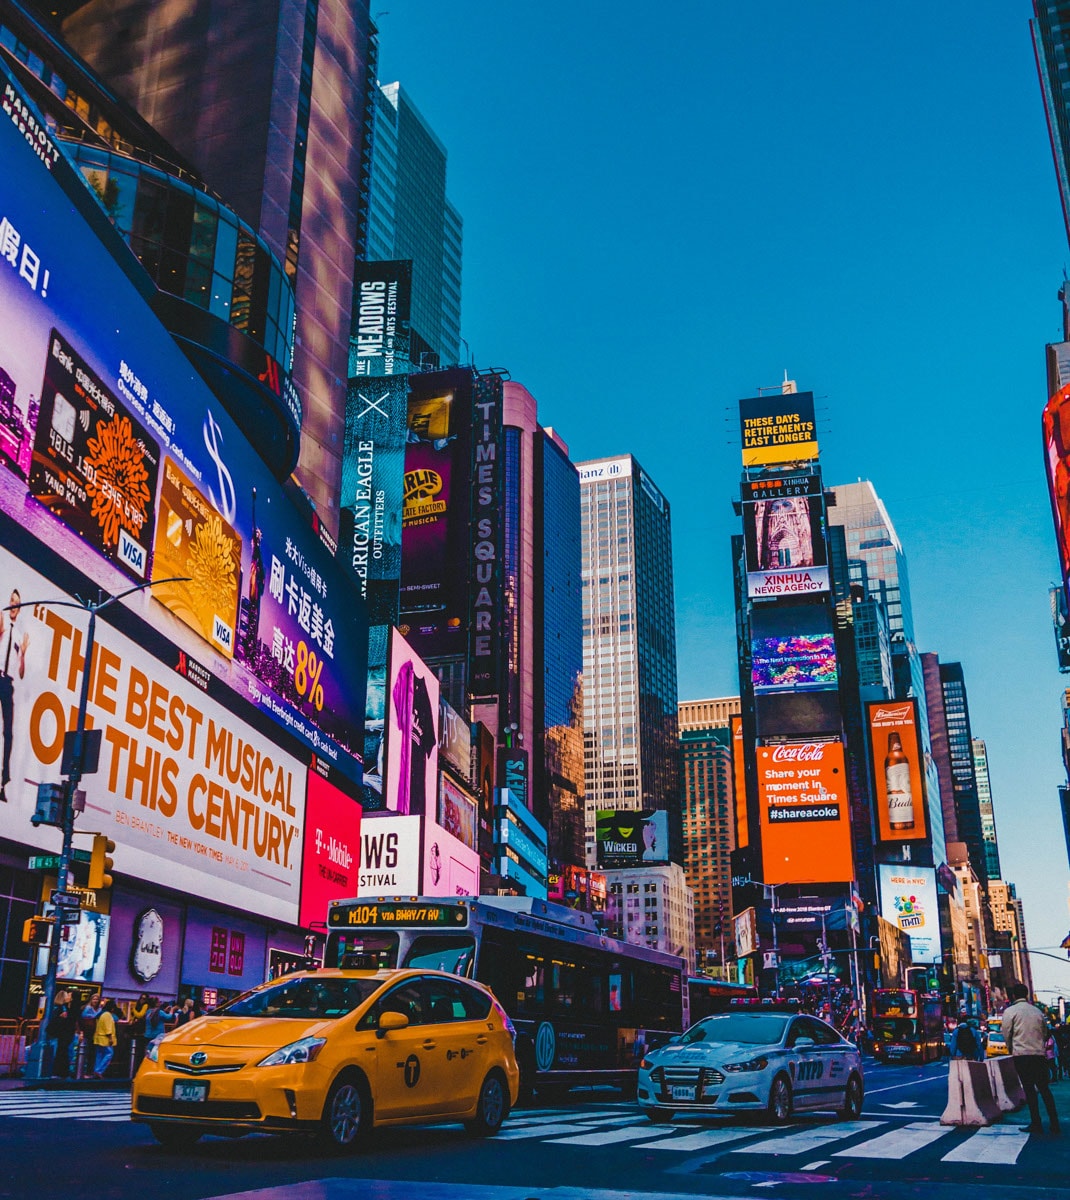 Digital Billboards at Times Square, New York